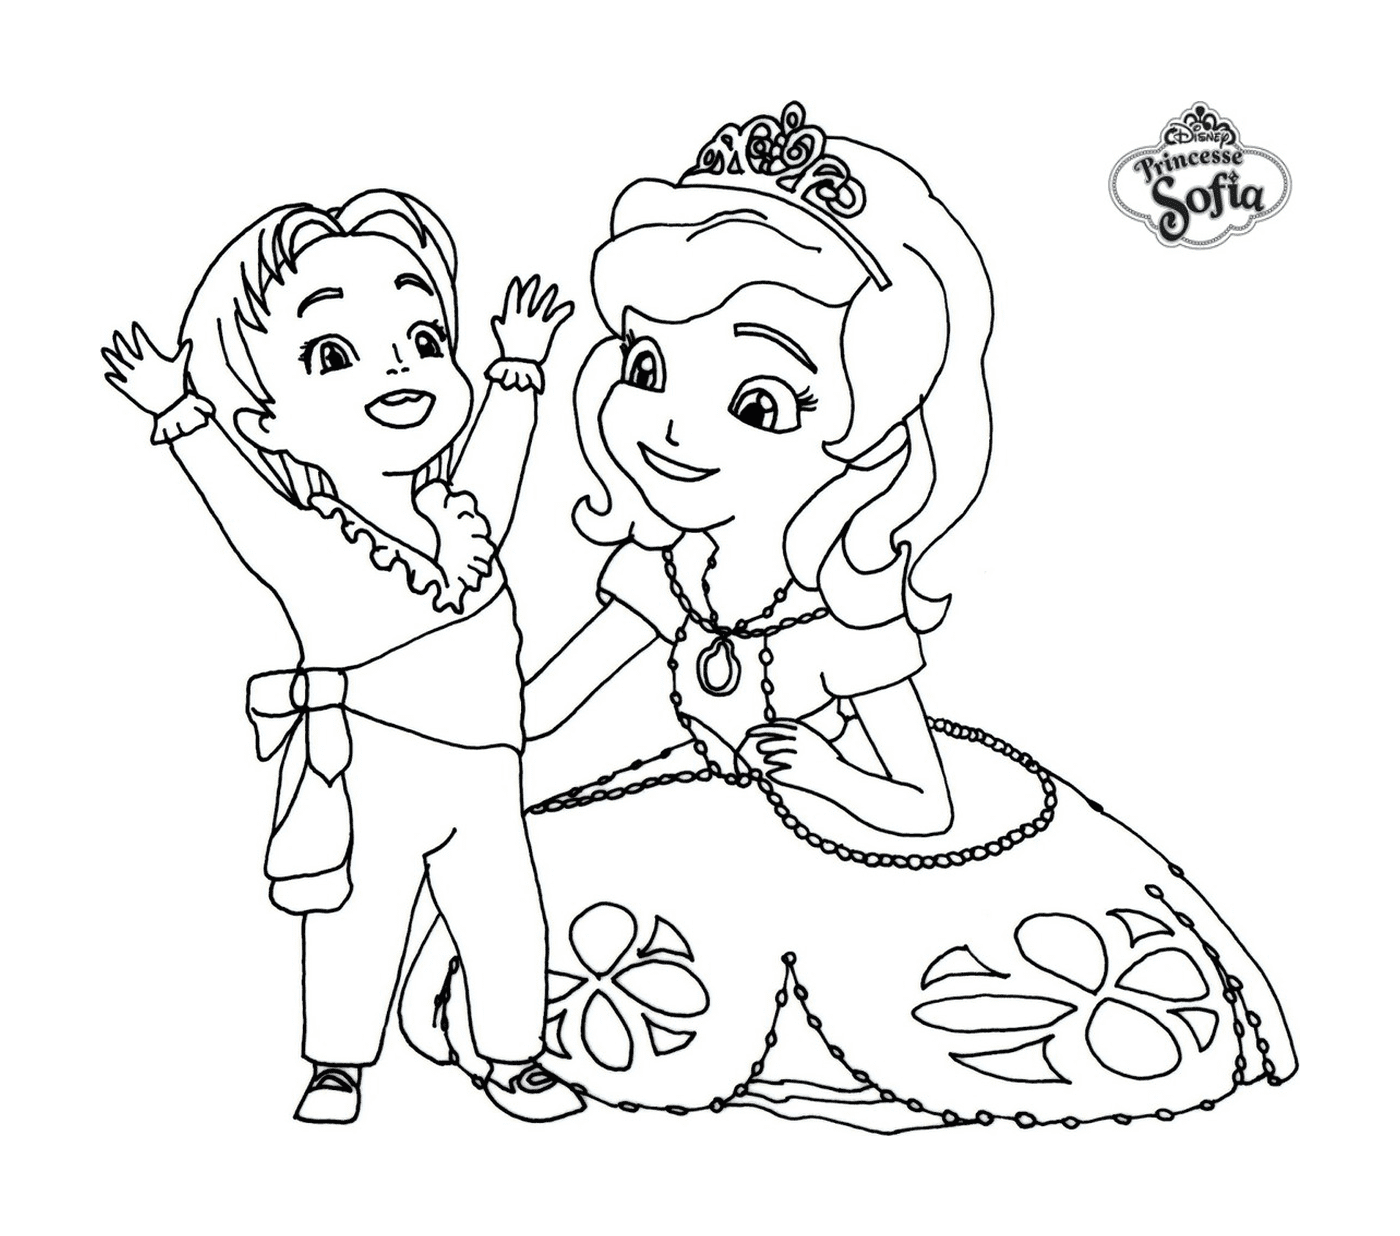  Princesa Sofía de Disney con un niño 